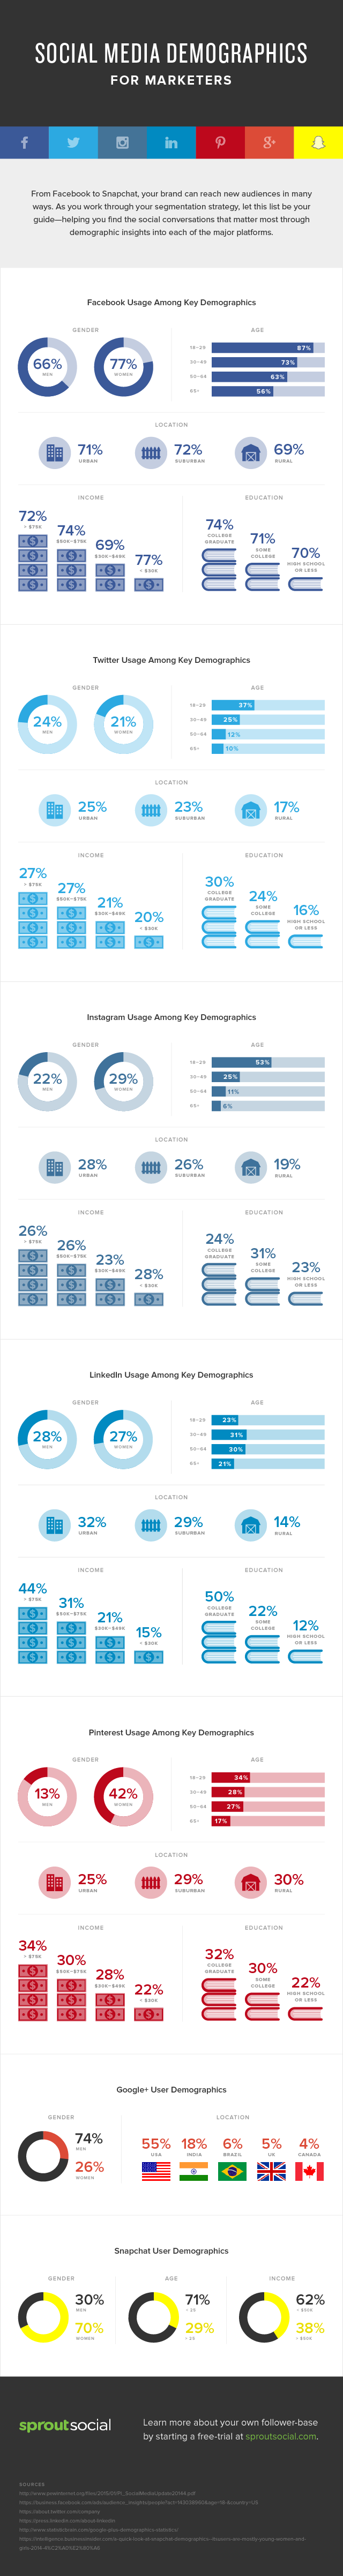 Social-Demographics_Infografica